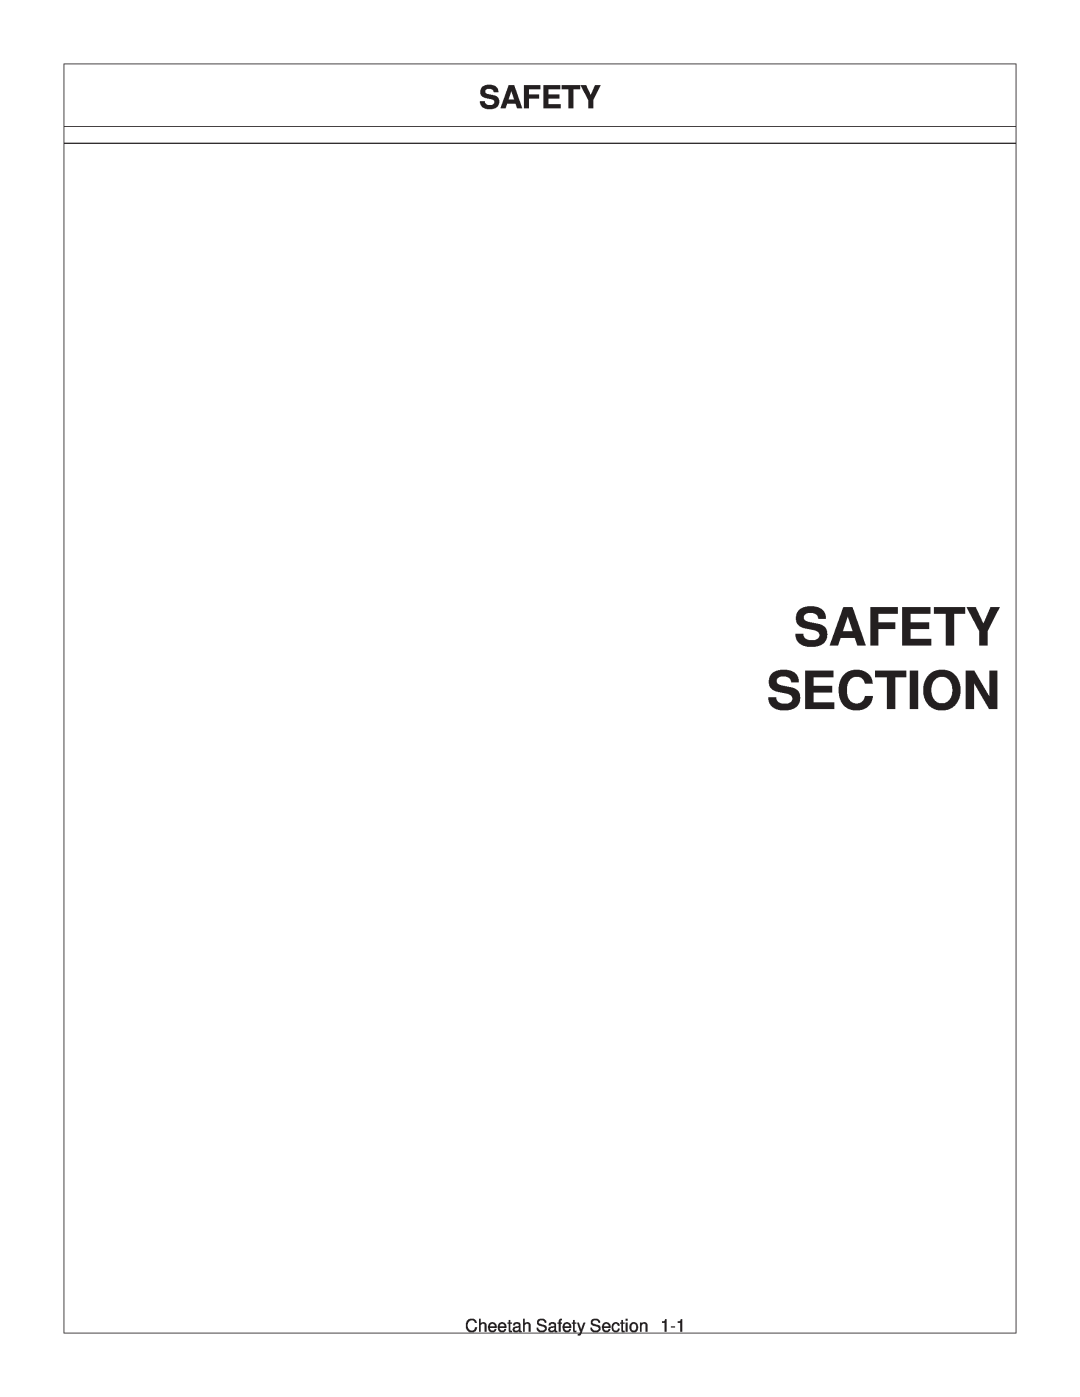 Tiger Products Co., Ltd JD 5083E, JD 5101E, JD 5093E manual Safety Section 